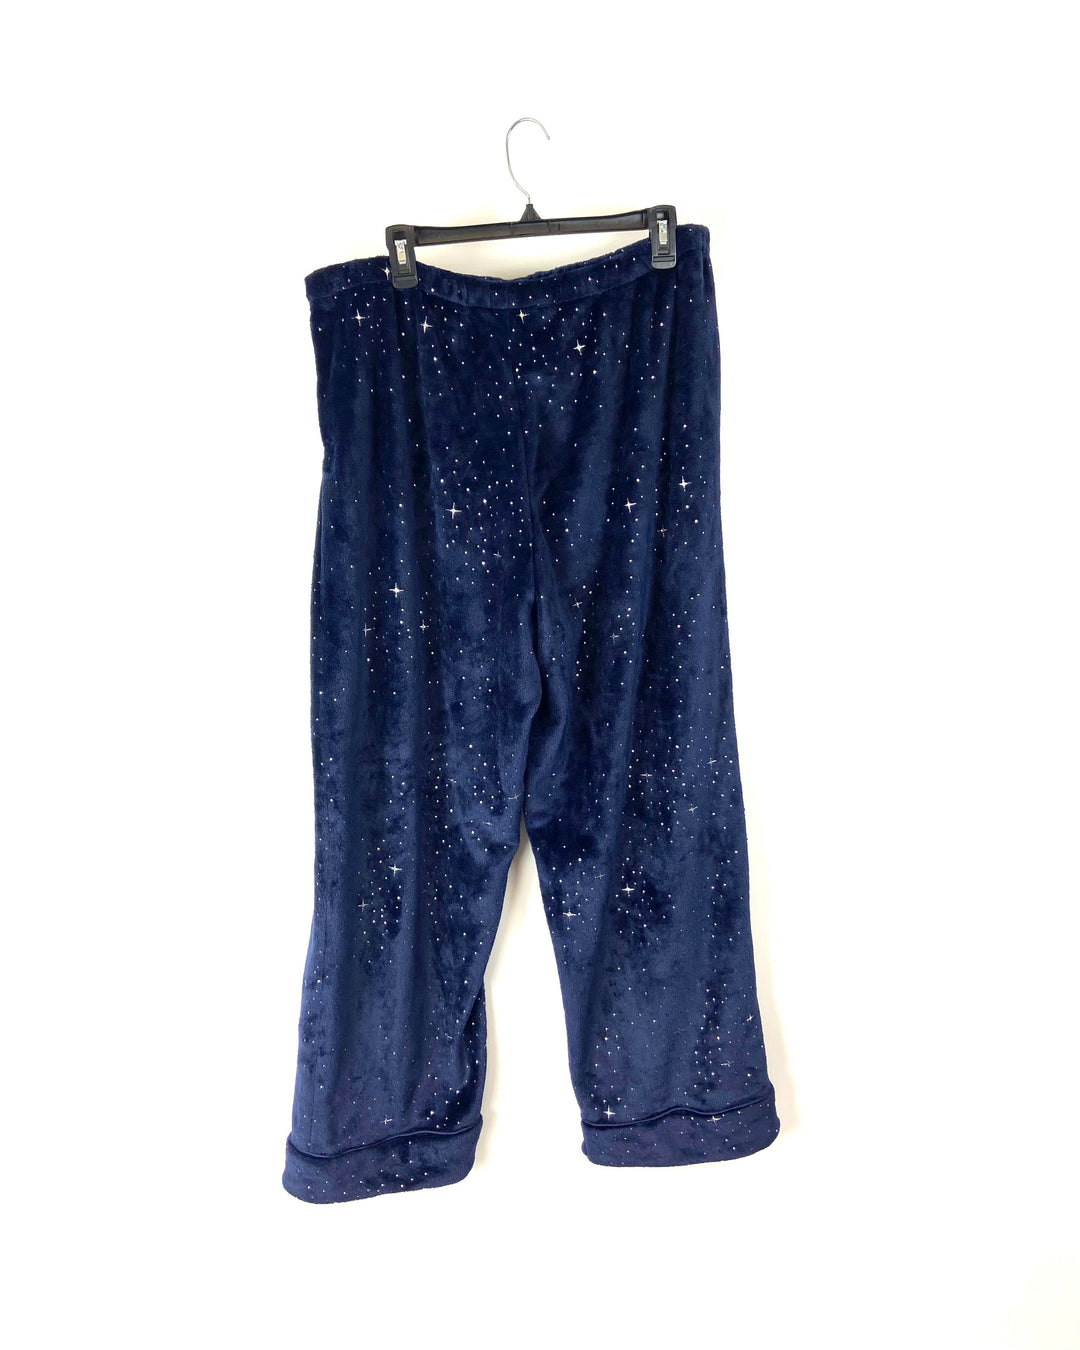 Navy Blue Fleece Pajama Pants- XL/1X